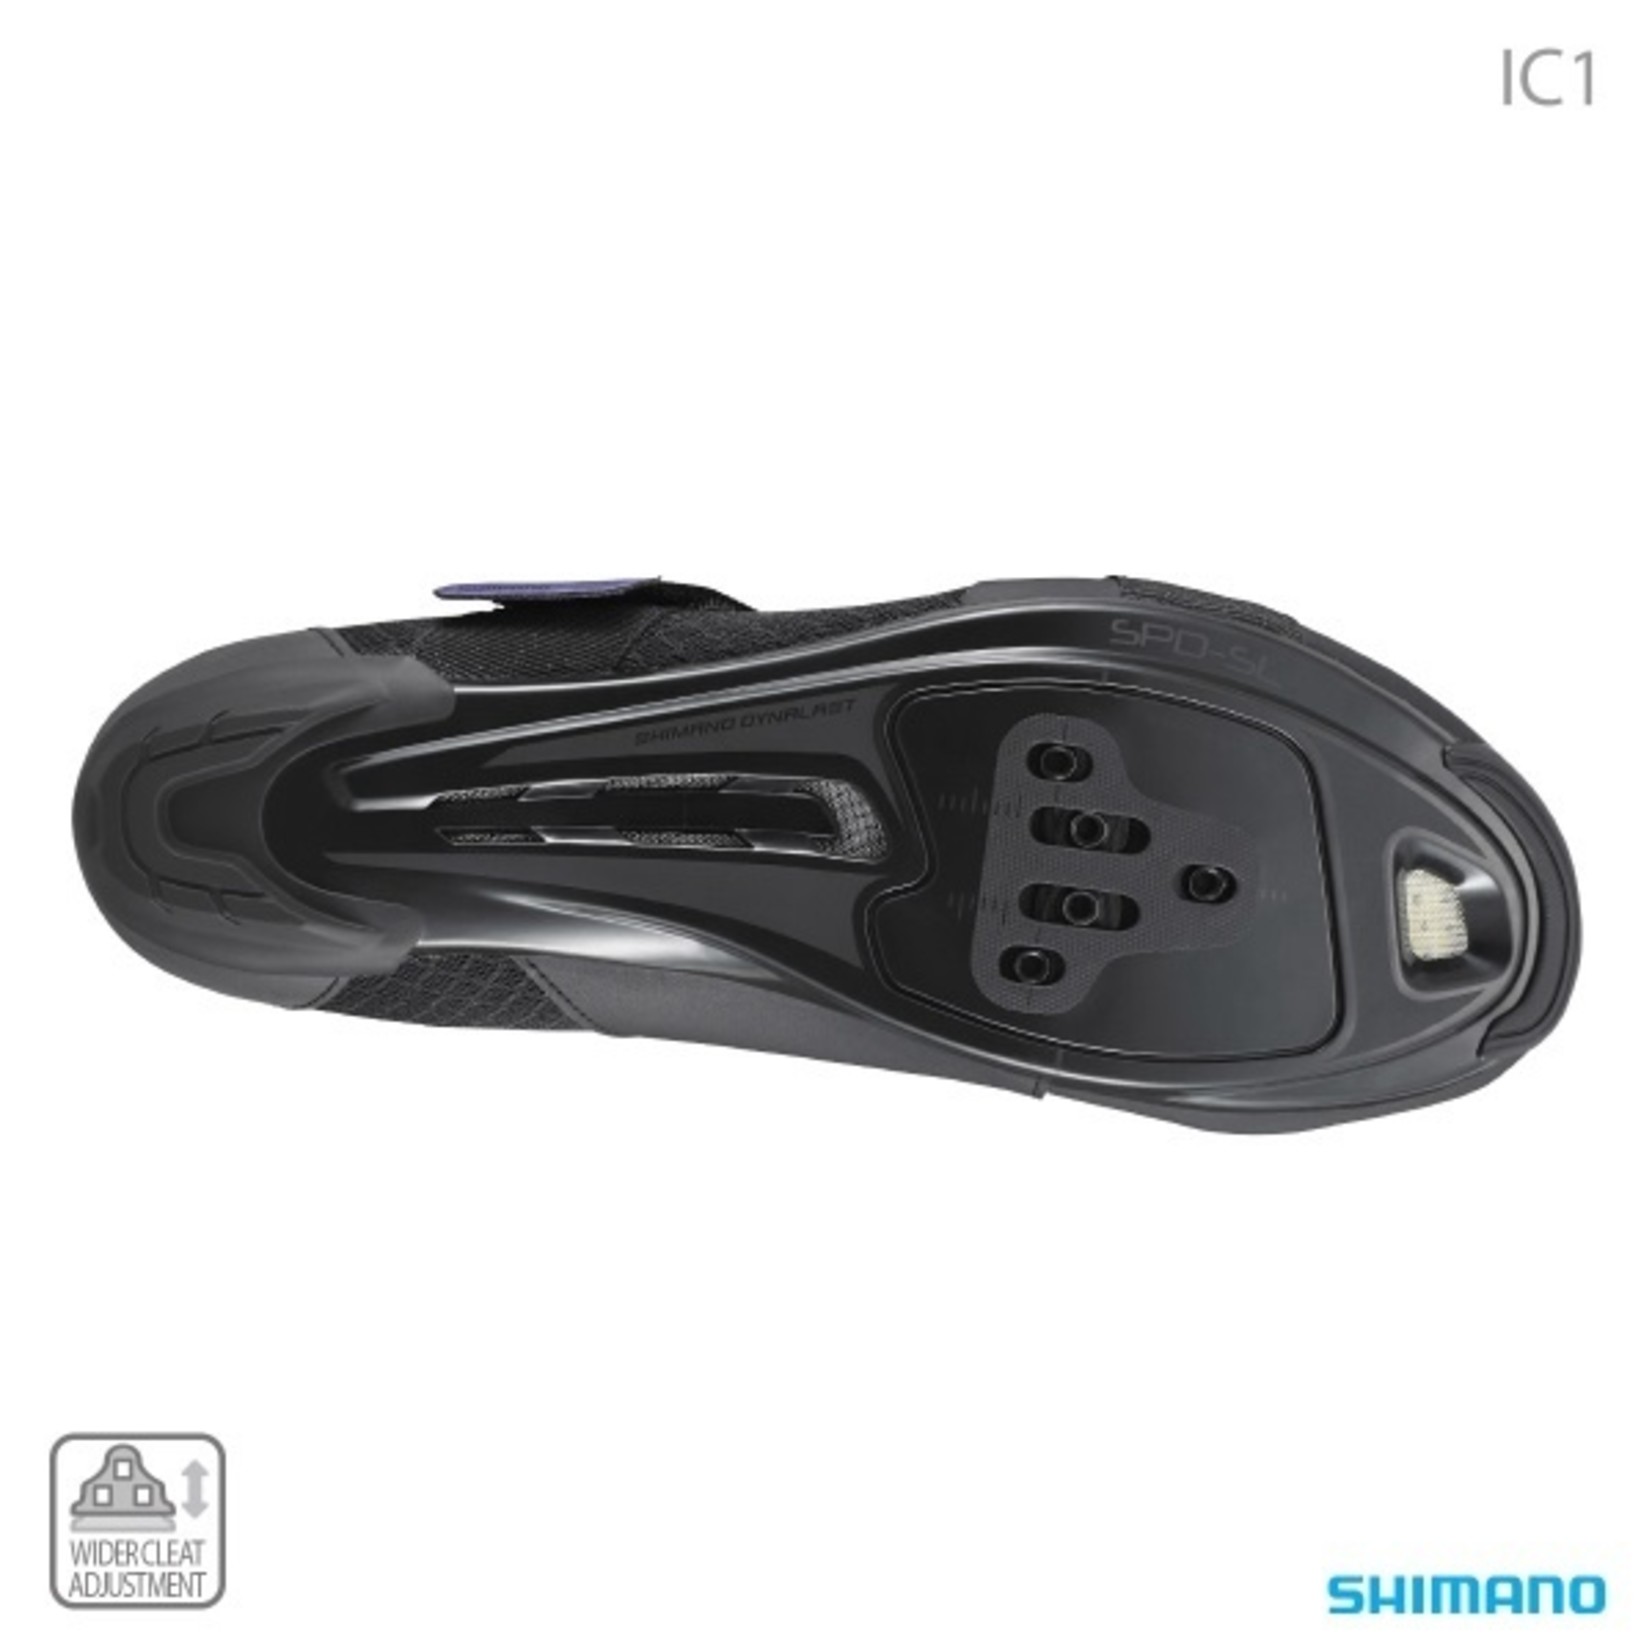 Shimano Shimano SH-IC100 Indoor Breathable, Comfortable Cycling Speed Shoes - Black